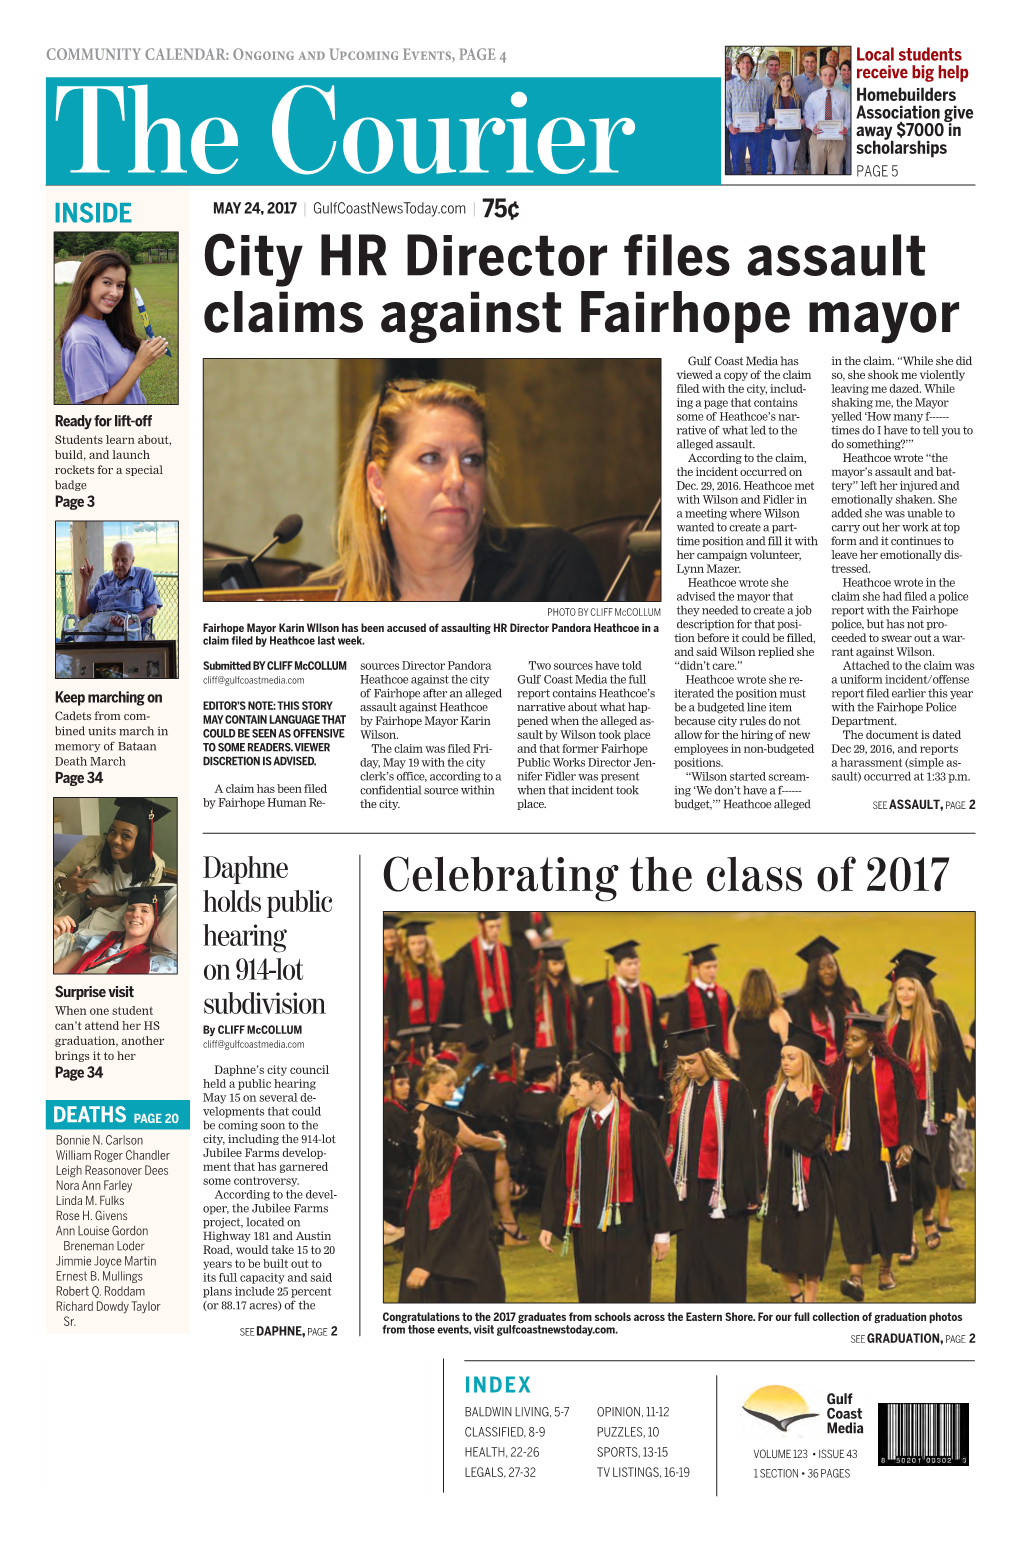 City HR Director Files Assault Claims Against Fairhope Mayor